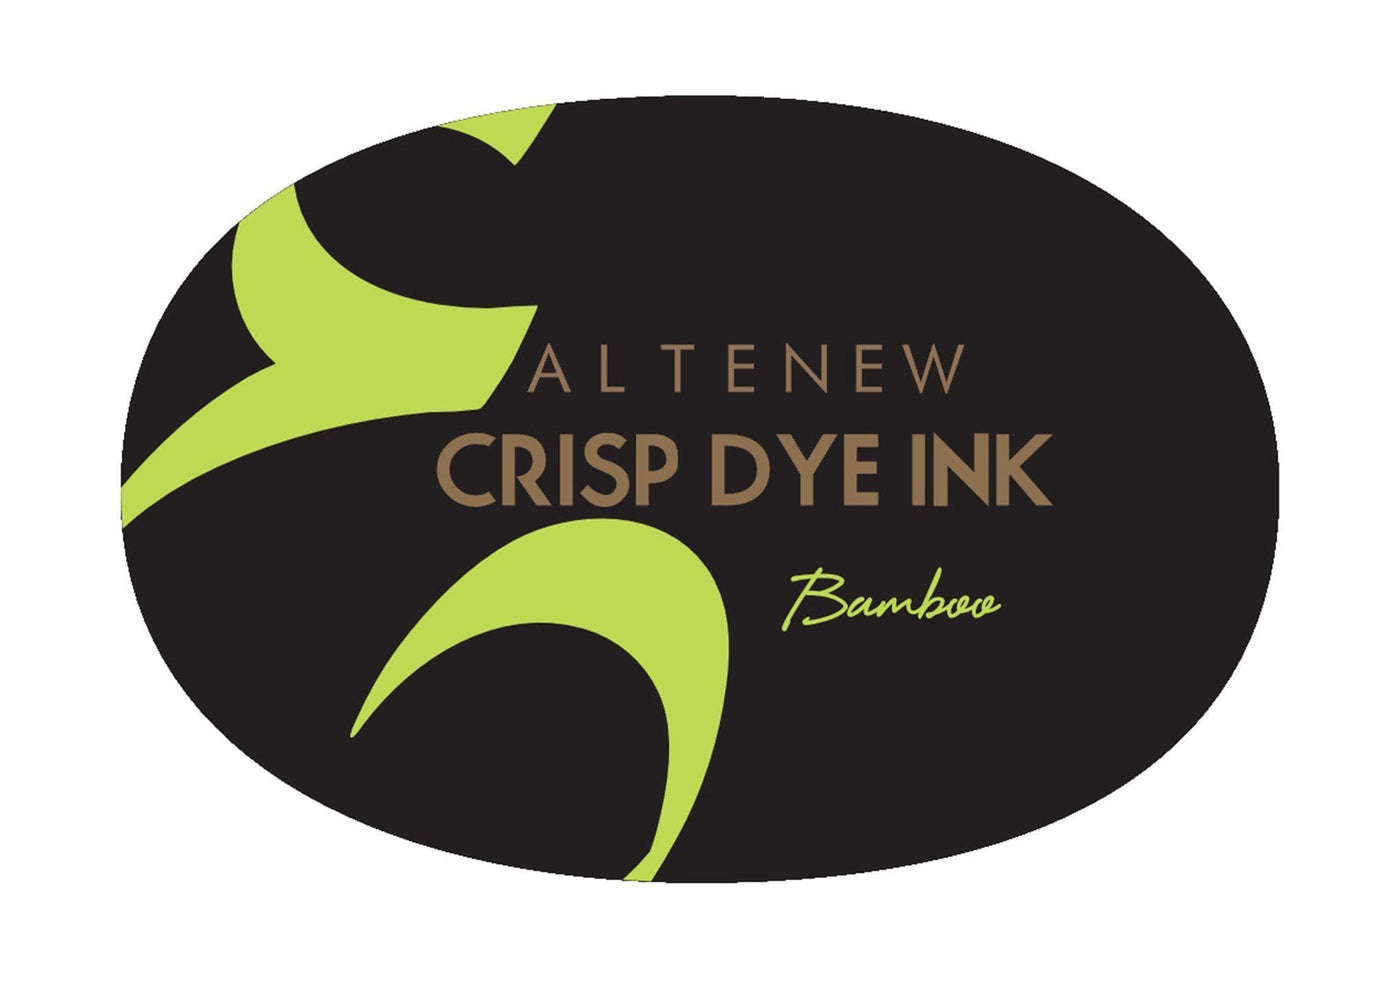 Stewart Superior Inks Bamboo Crisp Dye Ink